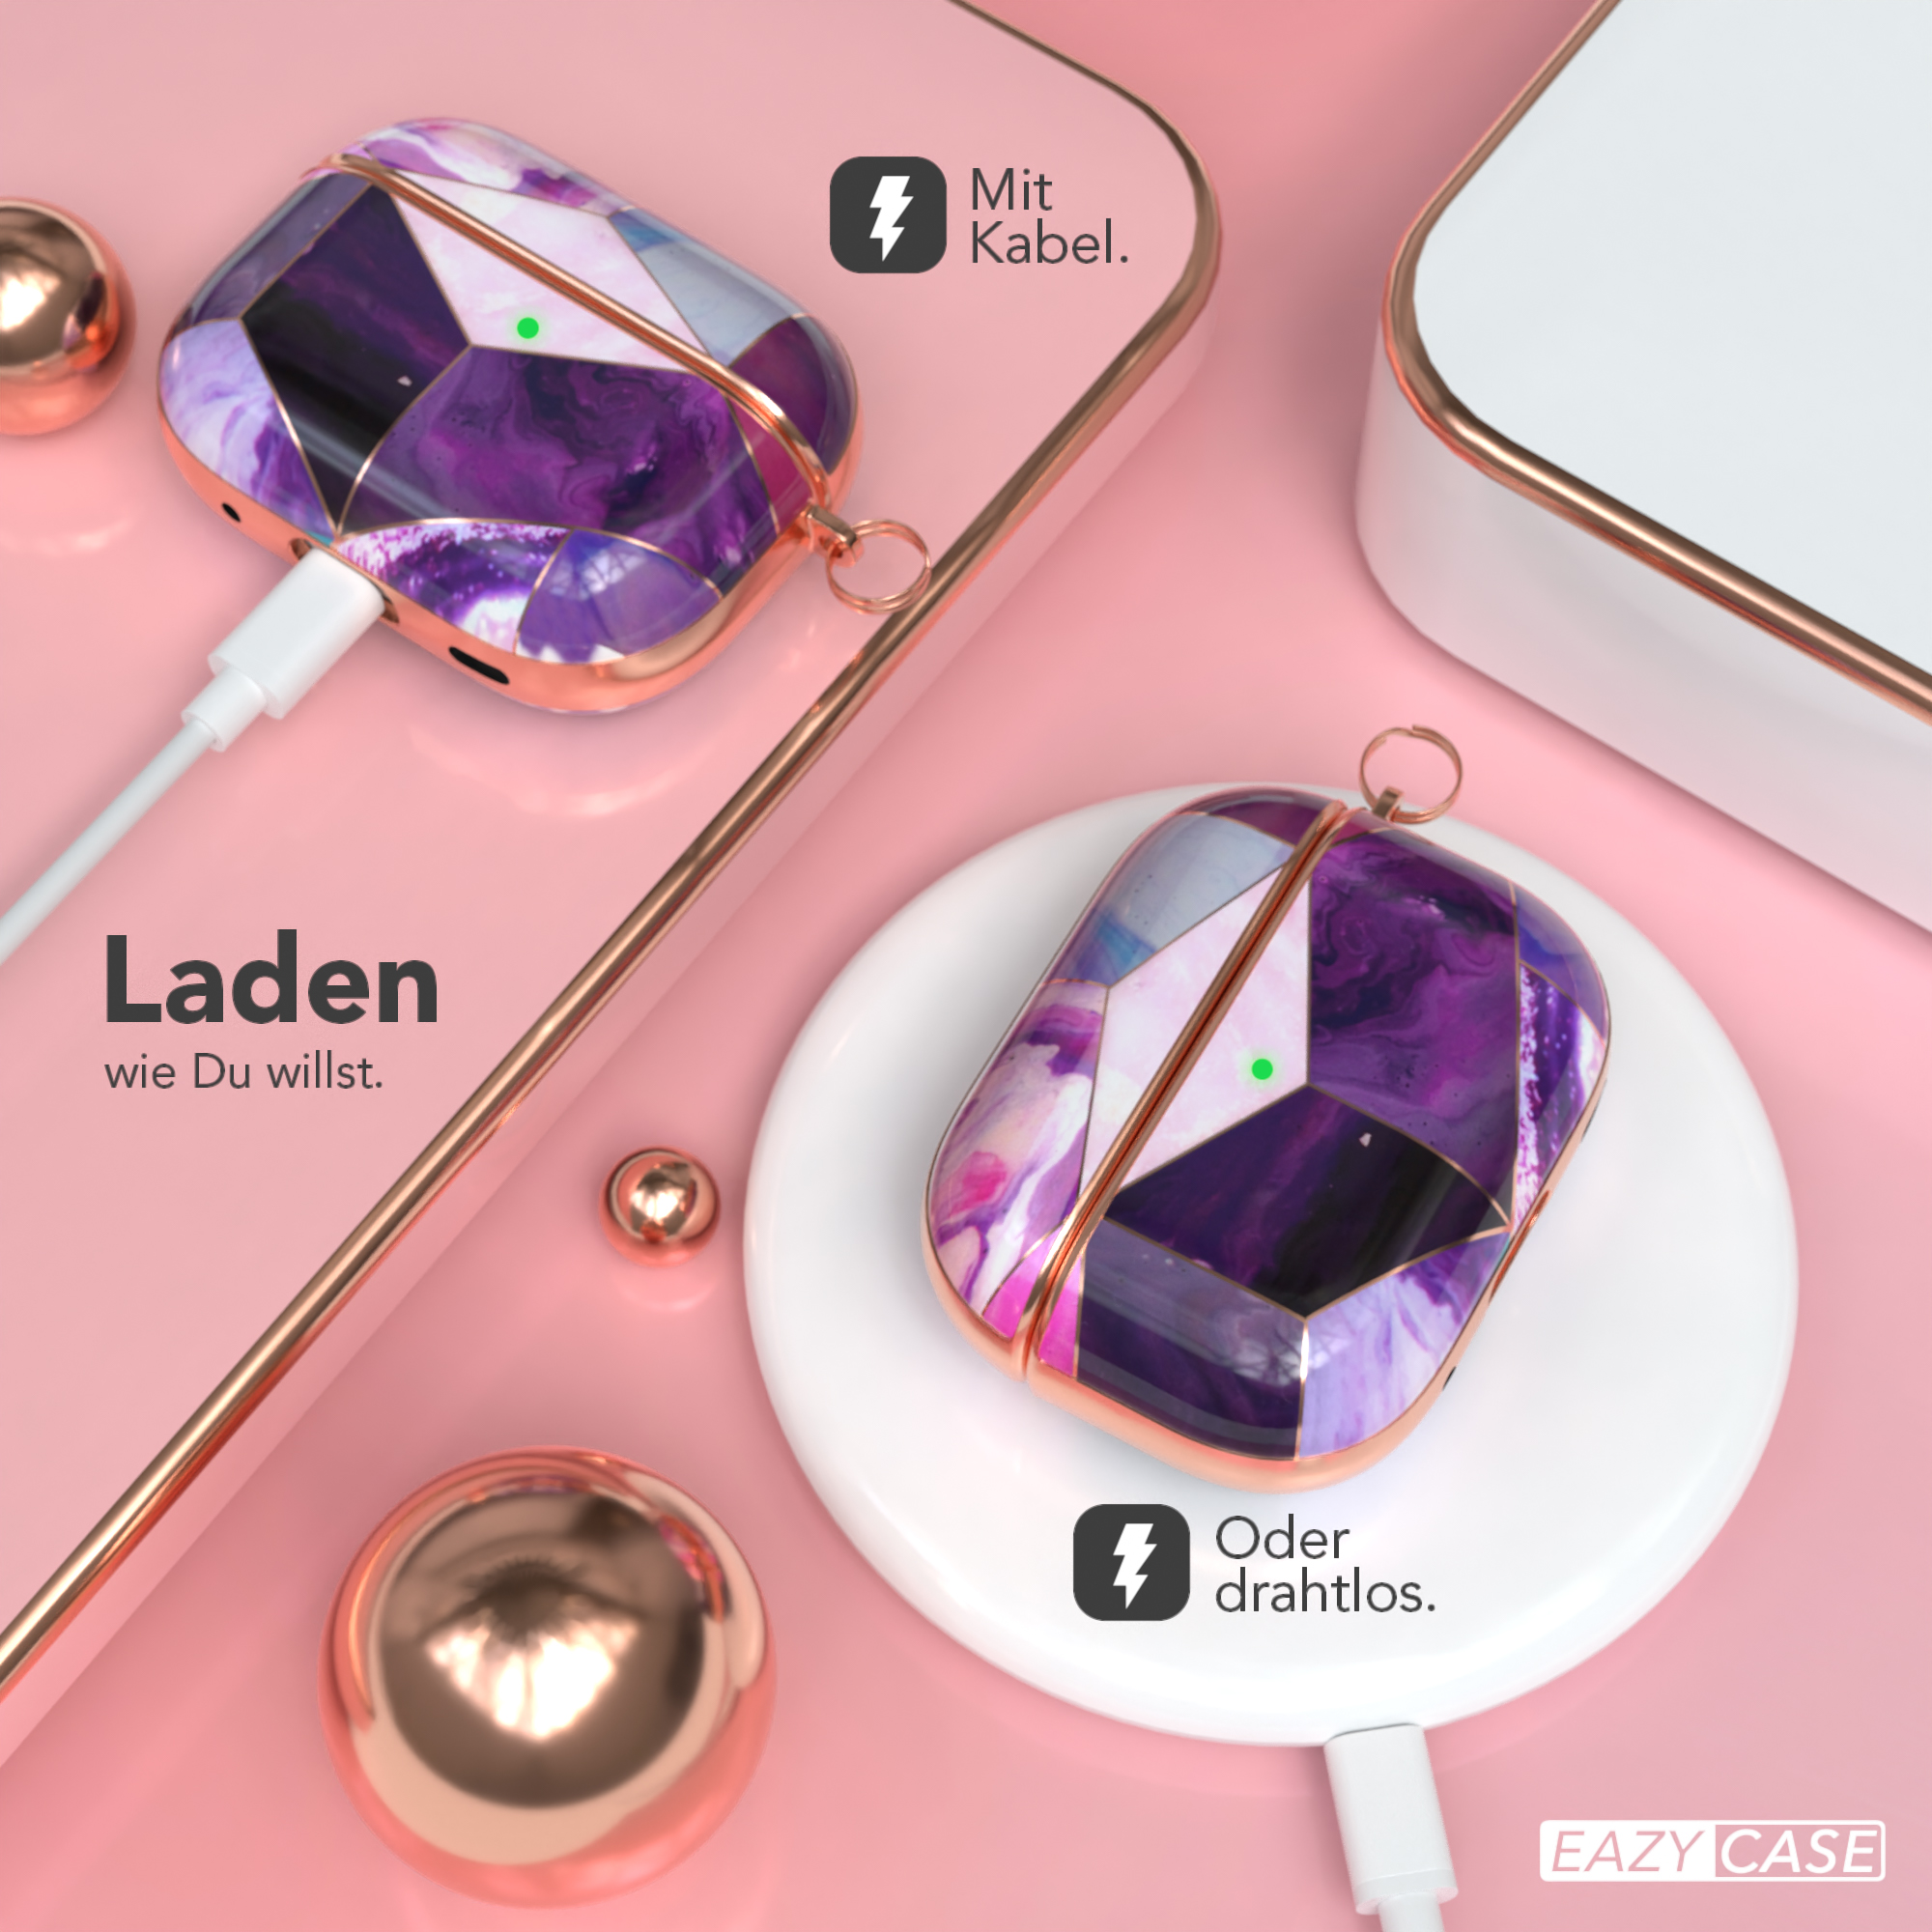 EAZY CASE AirPods Lila IMD / Apple für: Case Pro passend 2 Sleeve Rosegold Motiv Schutzhülle